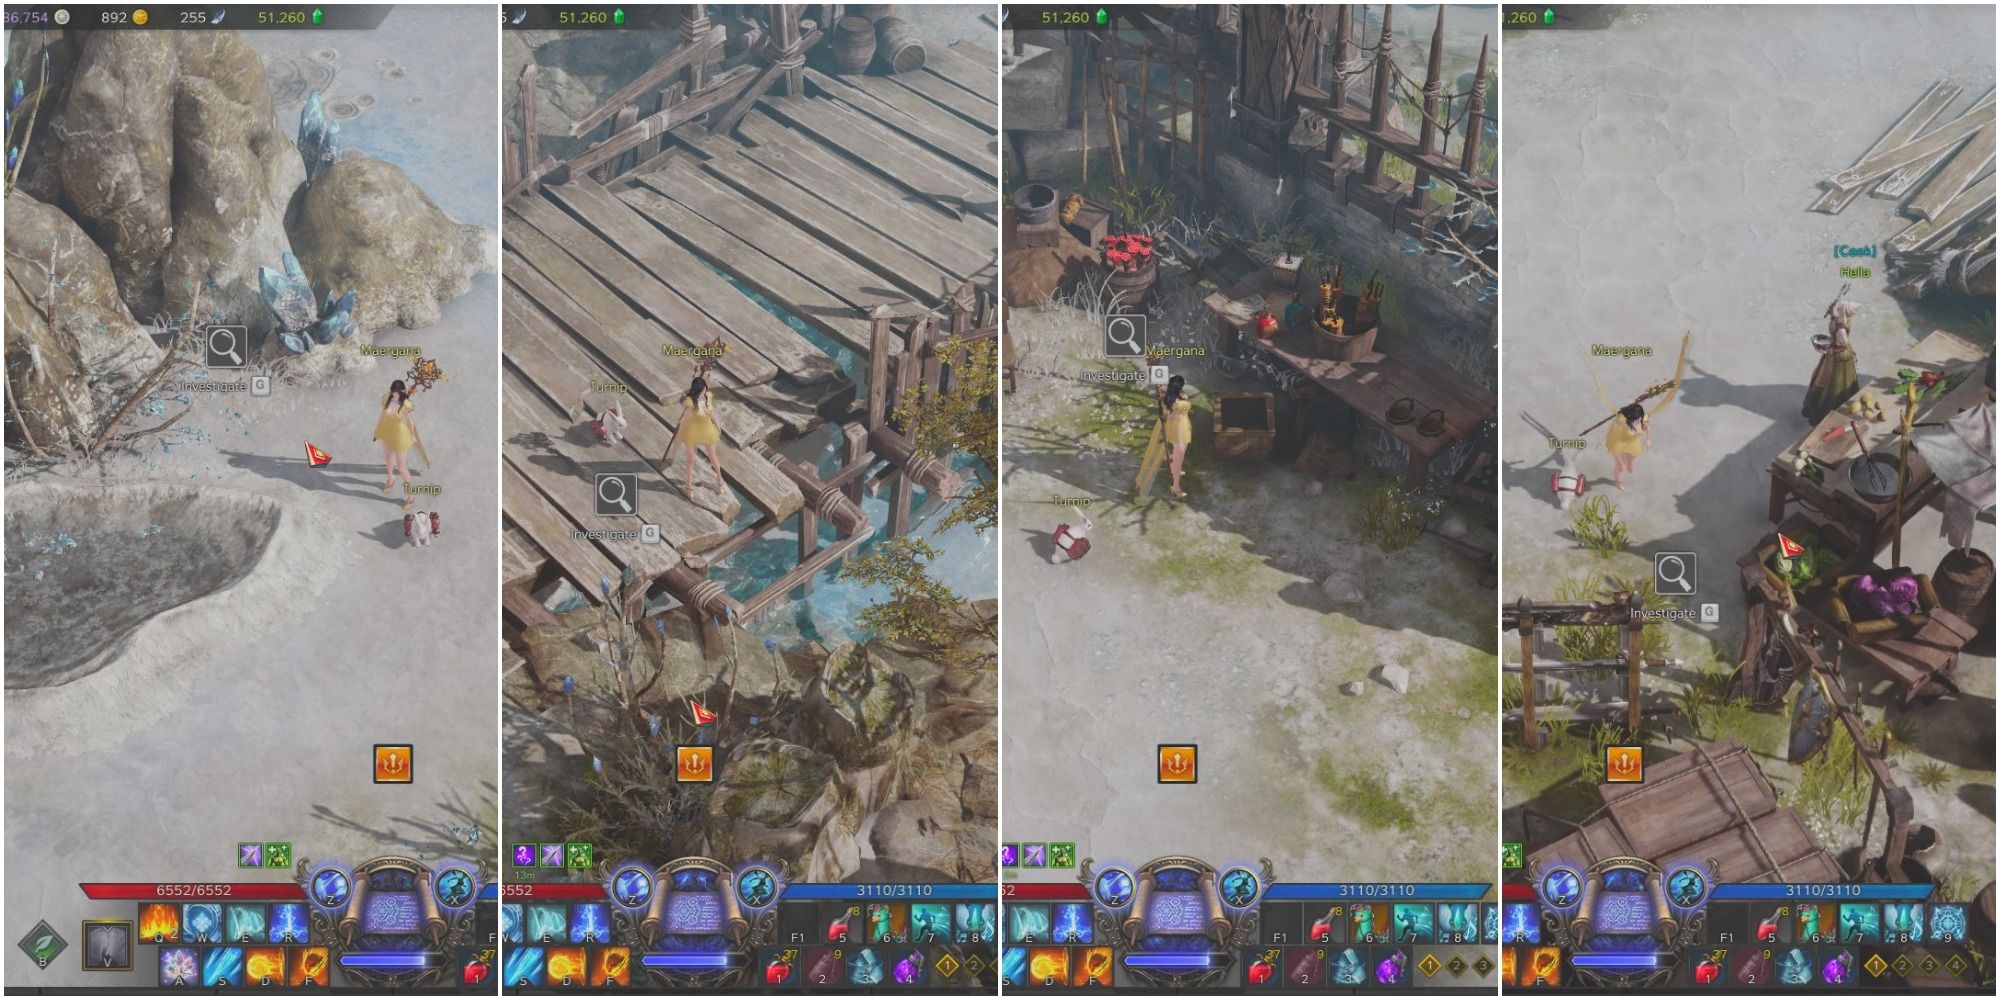 Split image of player by solar salt deposit, player by Salt Works bridge, player by merchant stand in Nomad Camp, and player by vendor in Nomad Camp